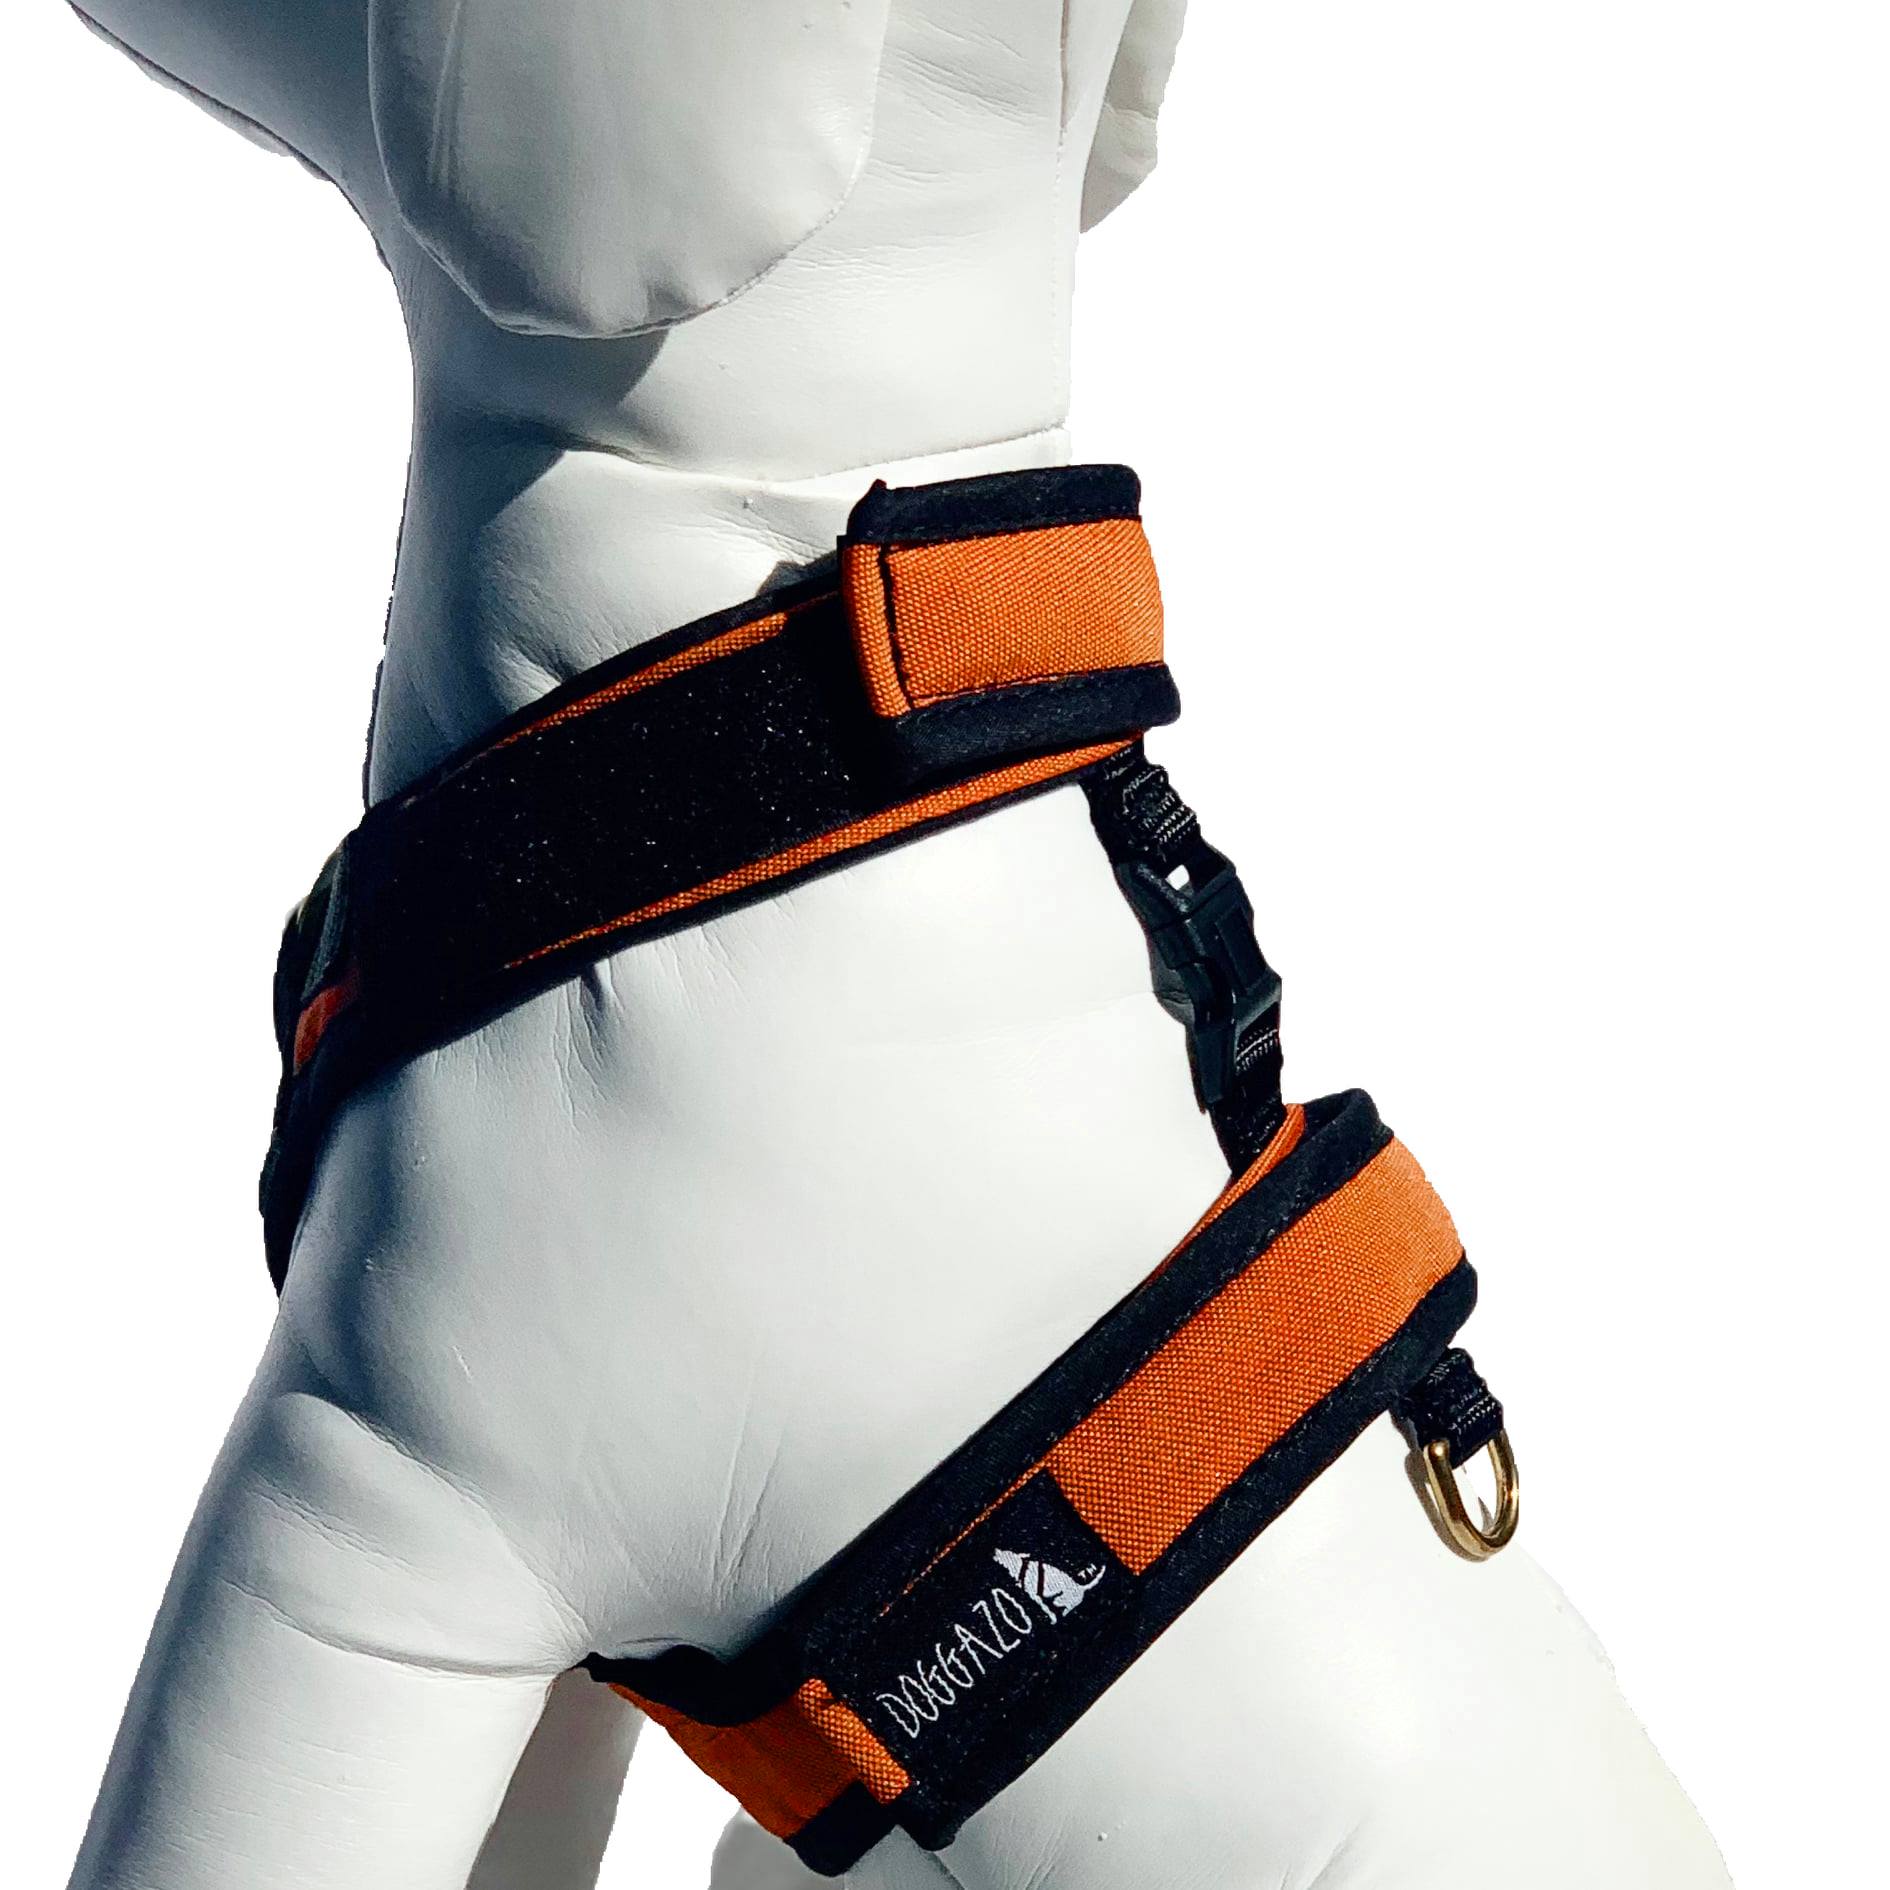 Orange Whoa Dog Whoa harness side view